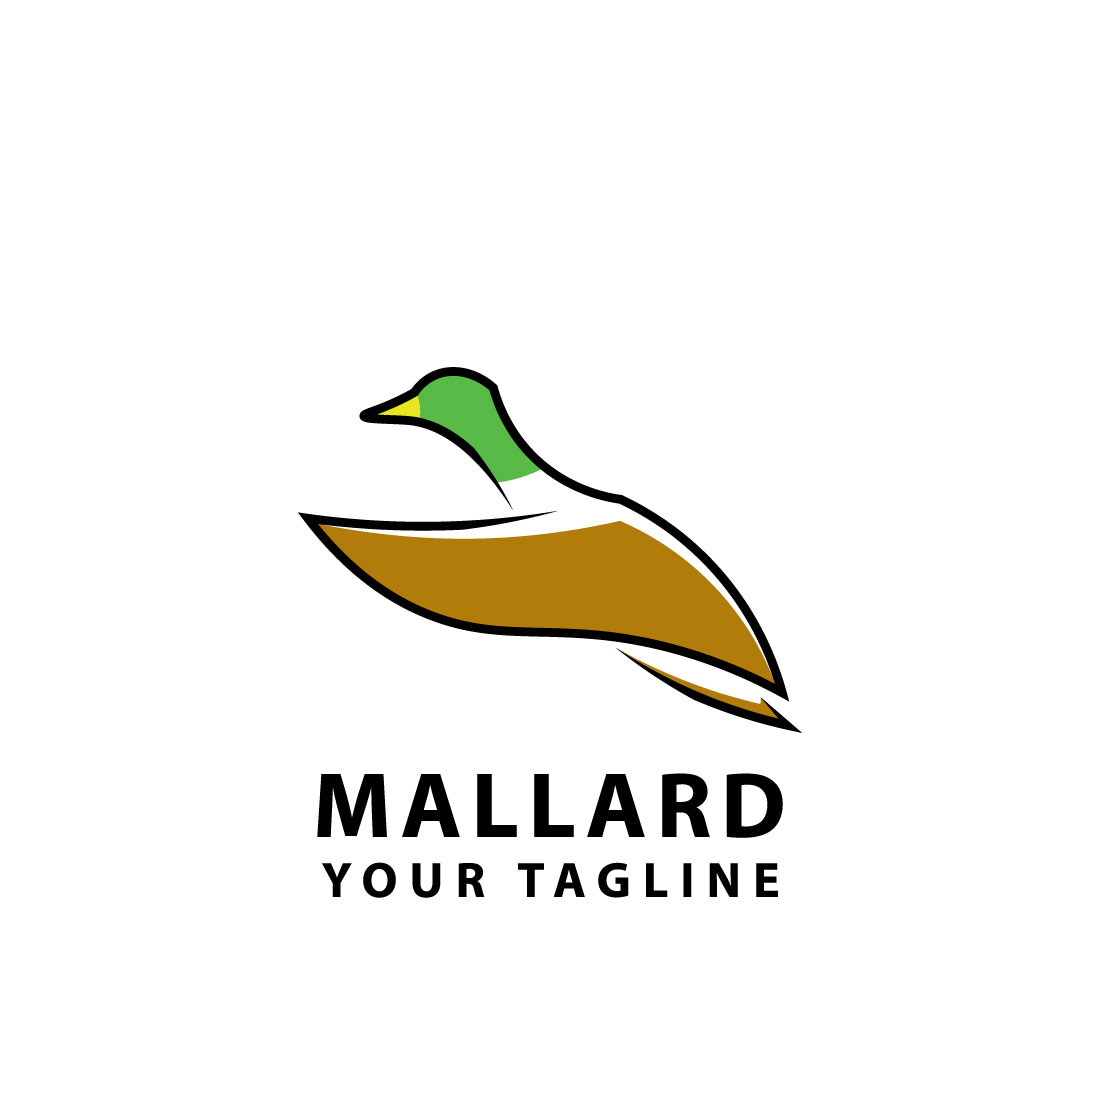 Mallard Abstract Logo preview image.